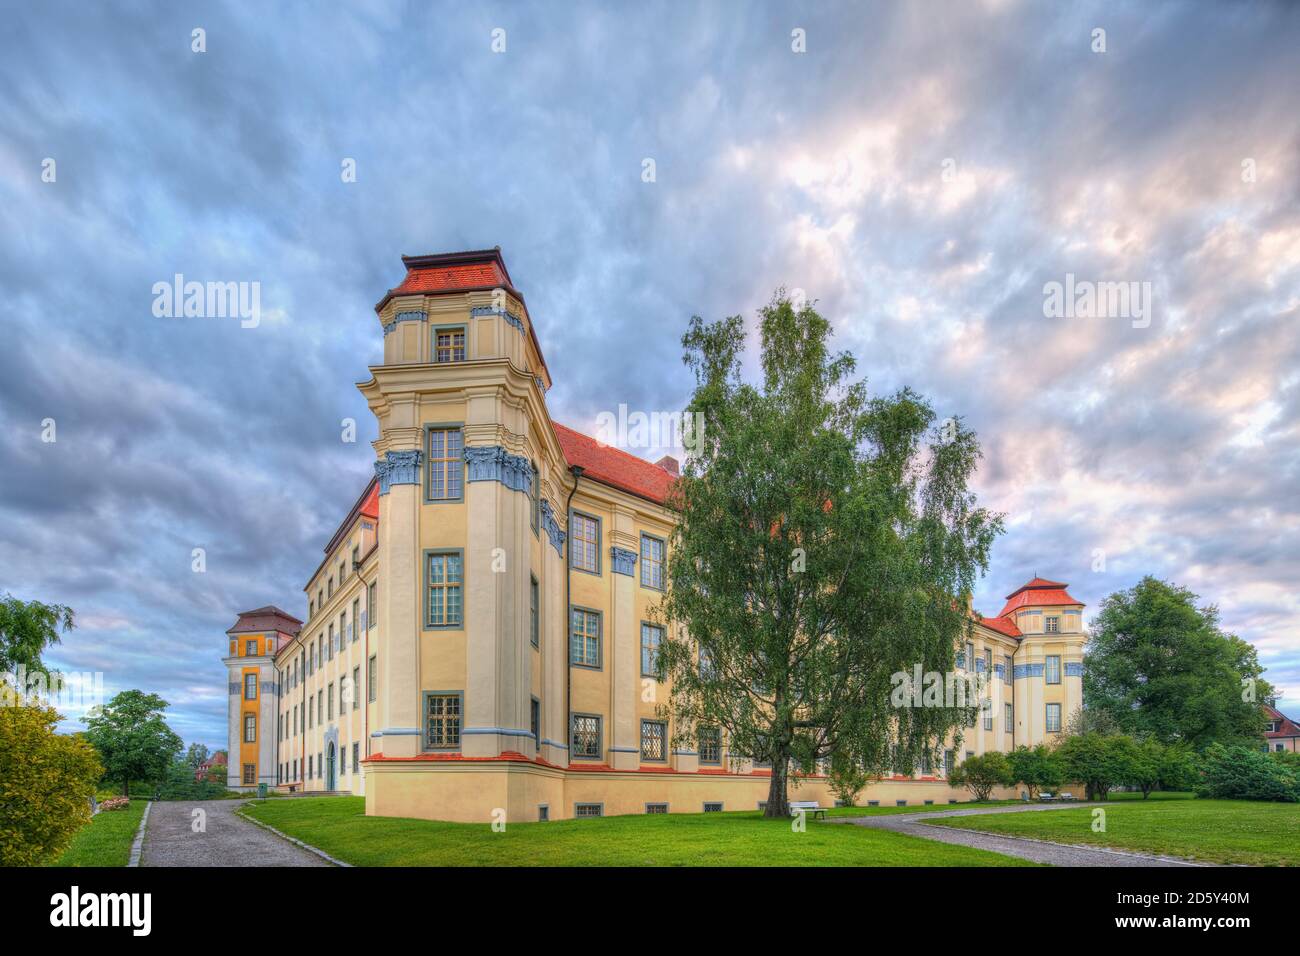 Germania, Tettnang, Castello nuovo Foto Stock